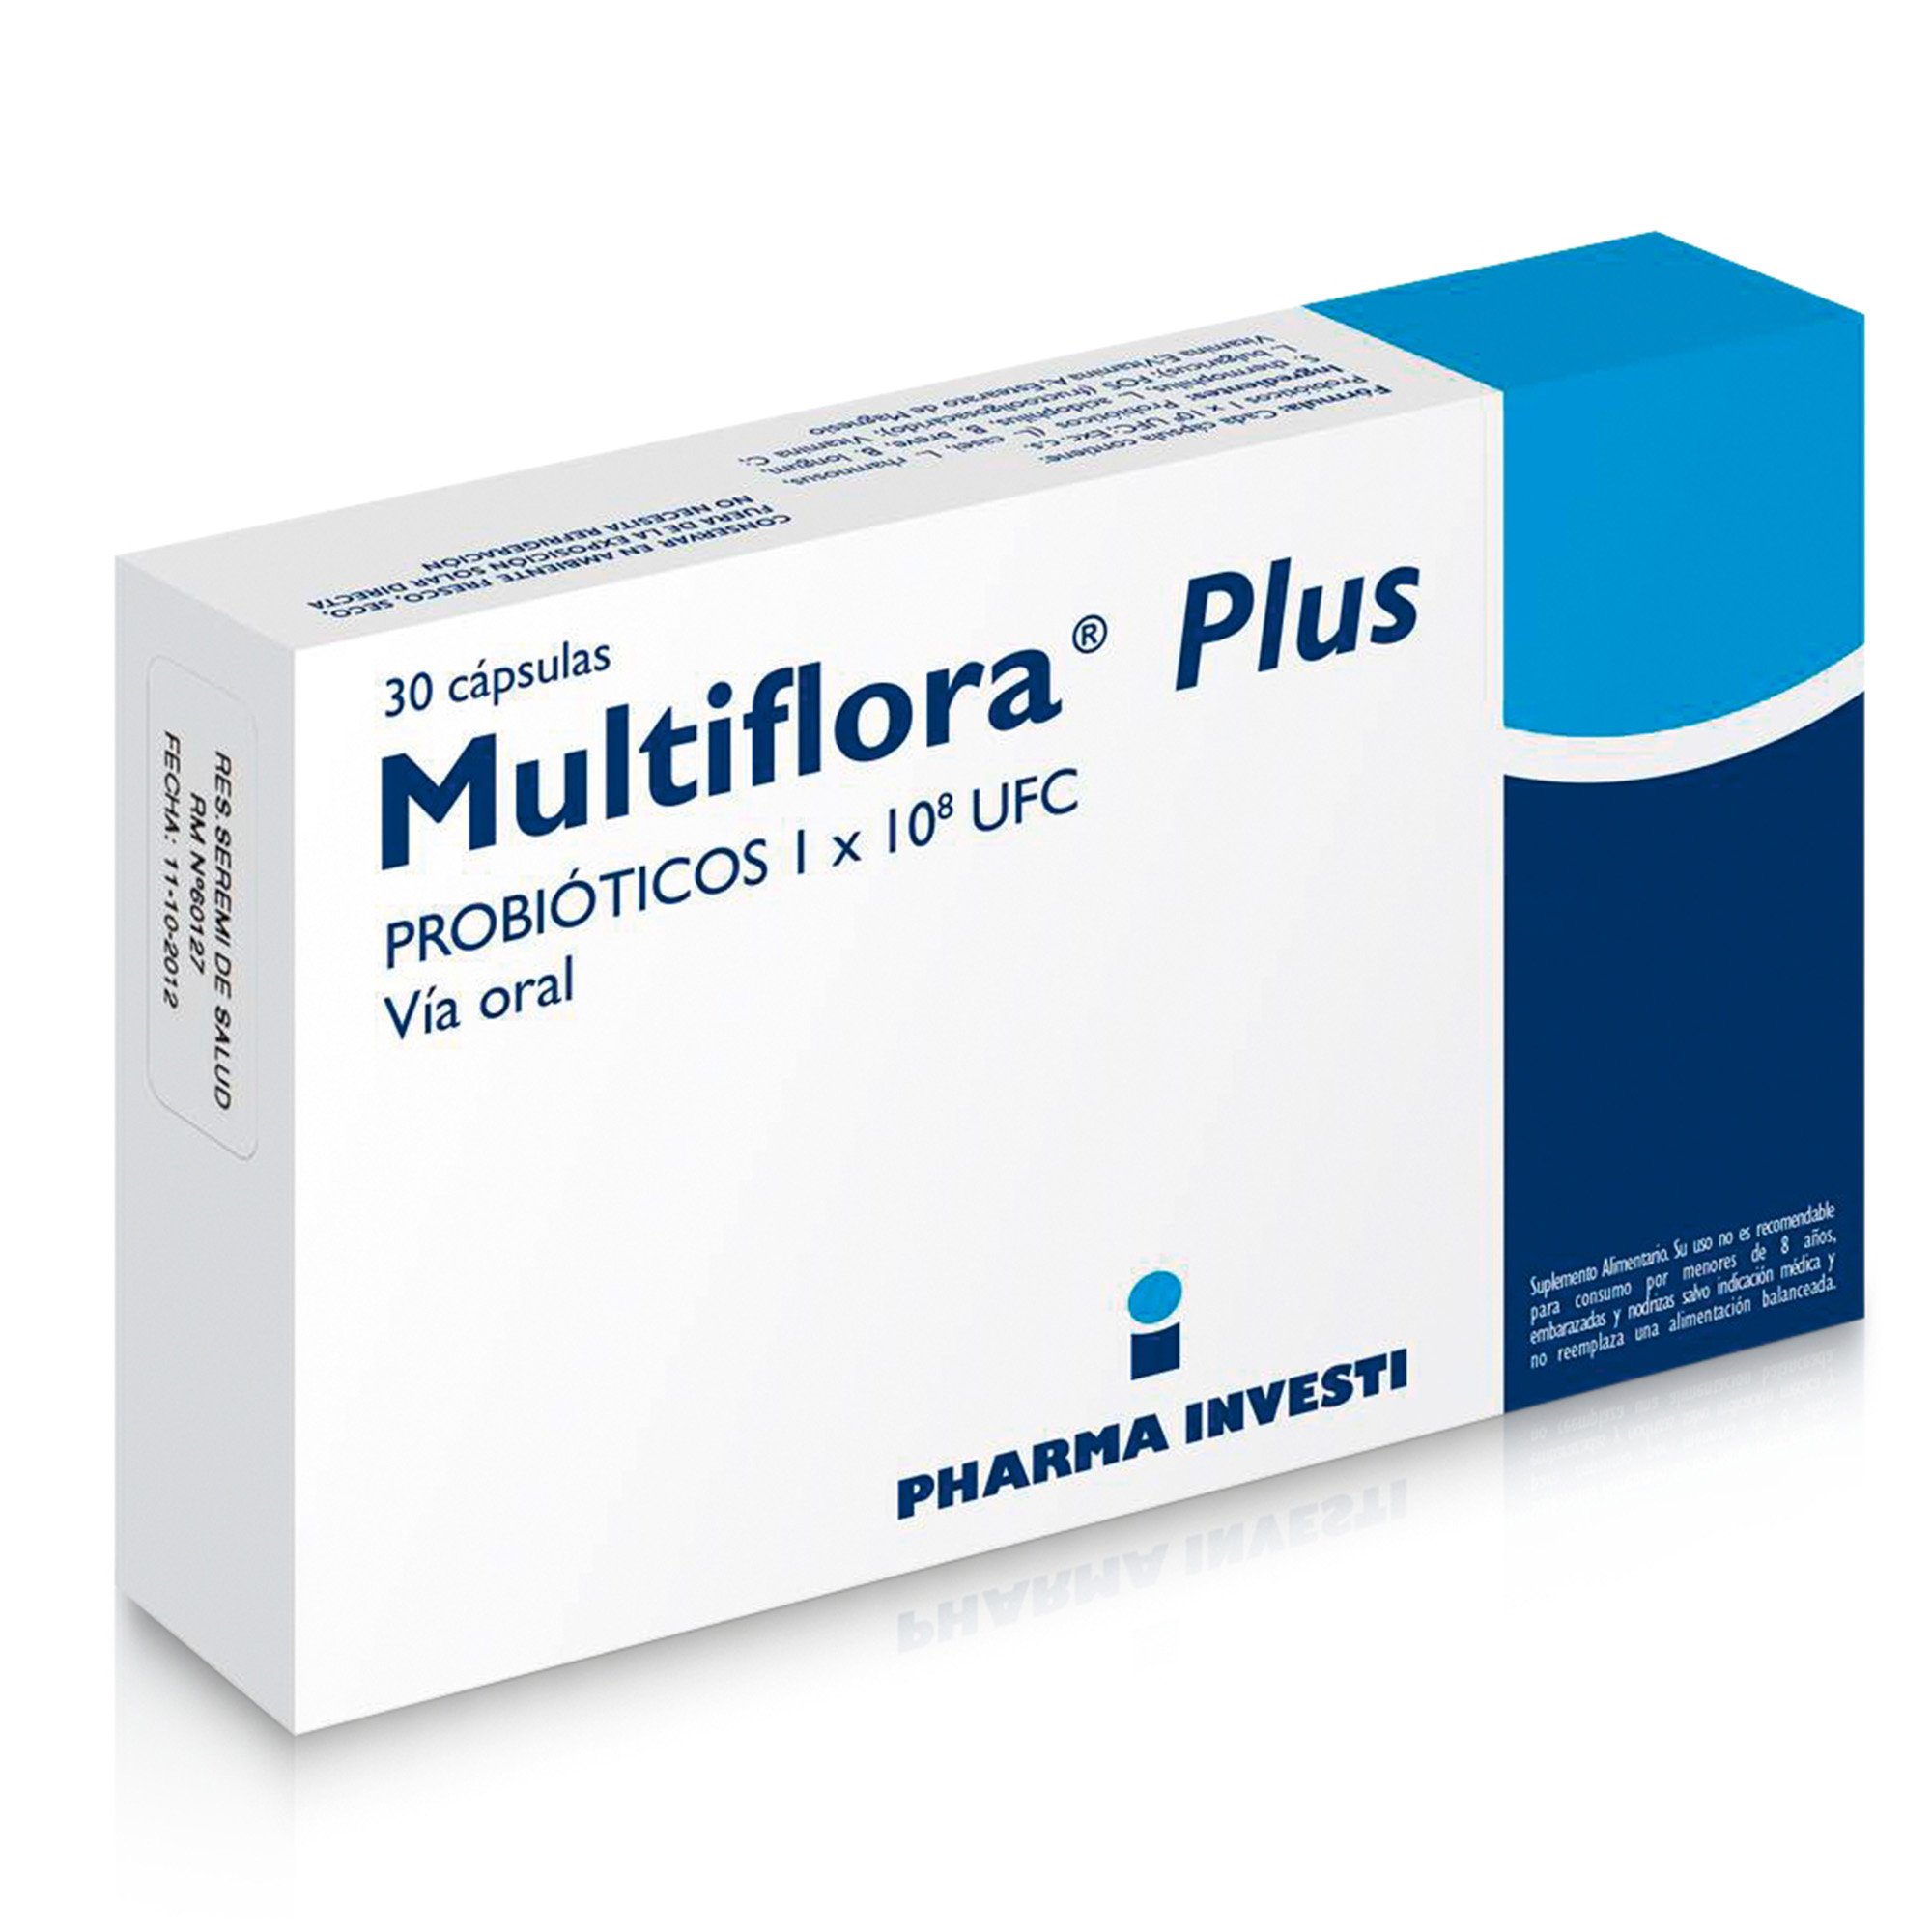 267357-multiflora-plus-capsula-30-unidades-probioticos.jpg